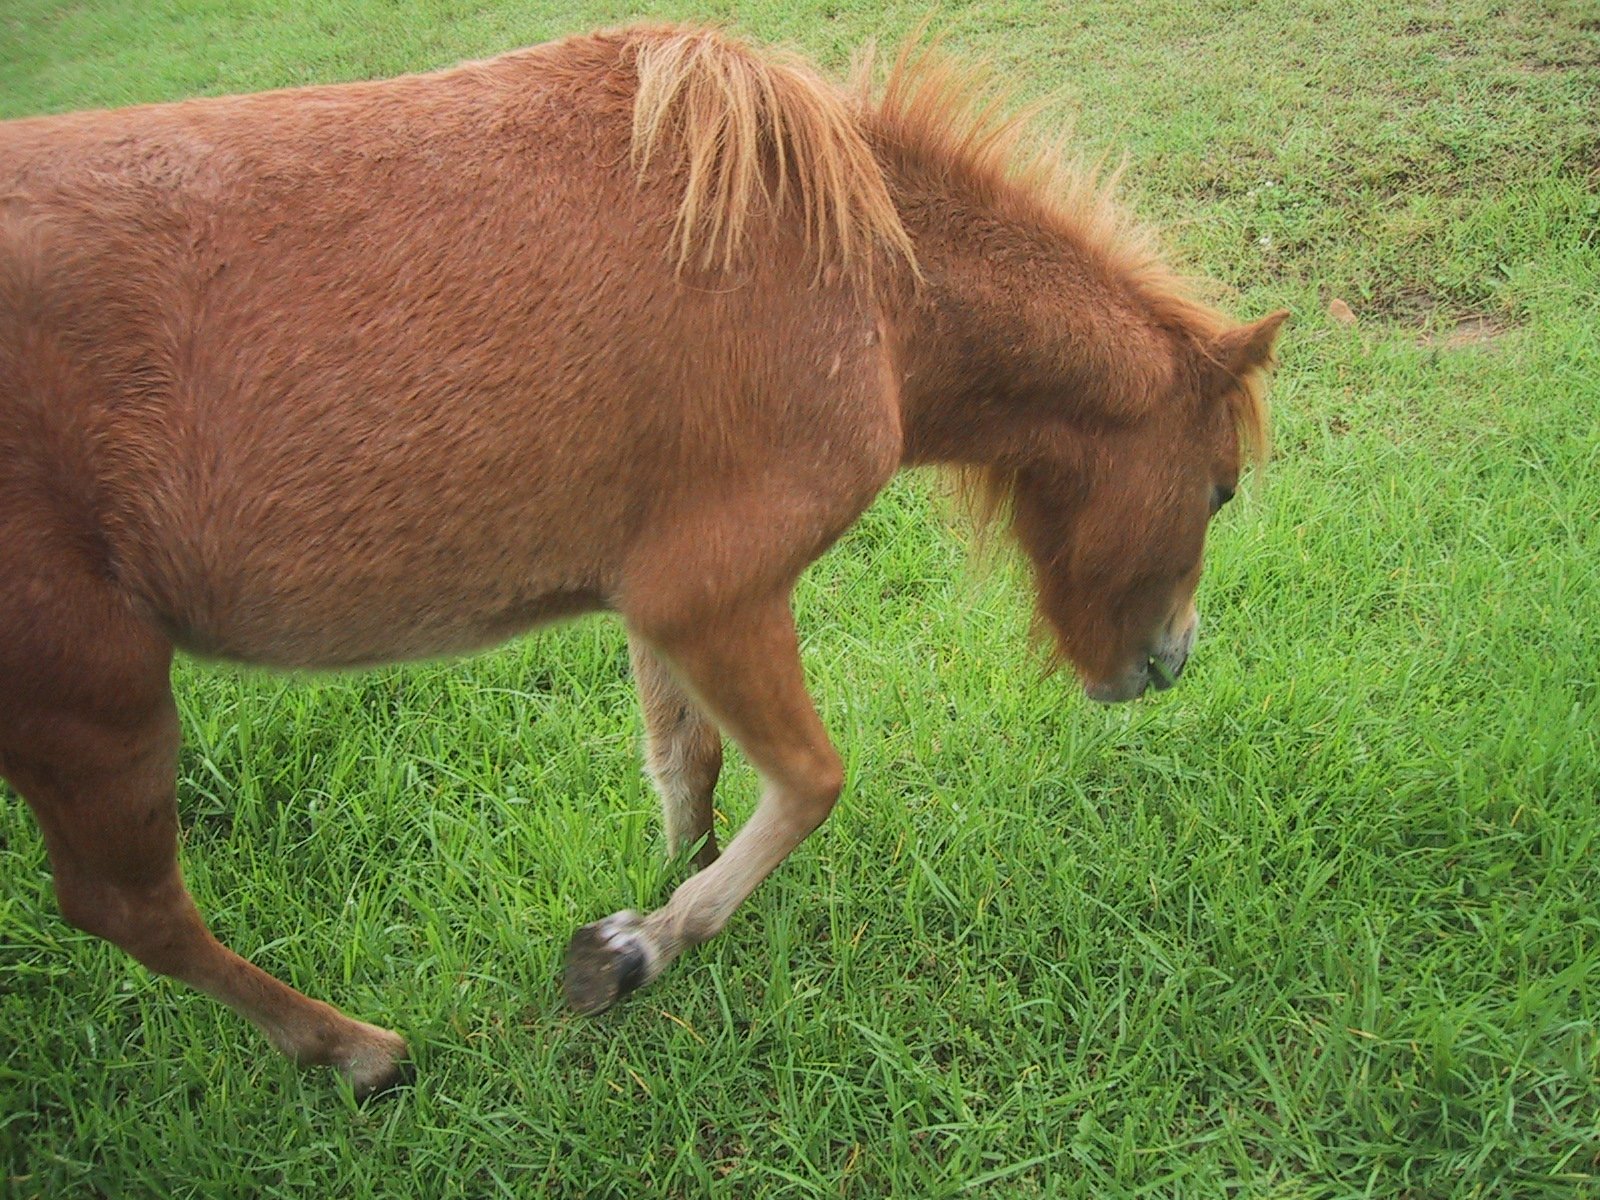 the pony is enjoying the fresh green grass